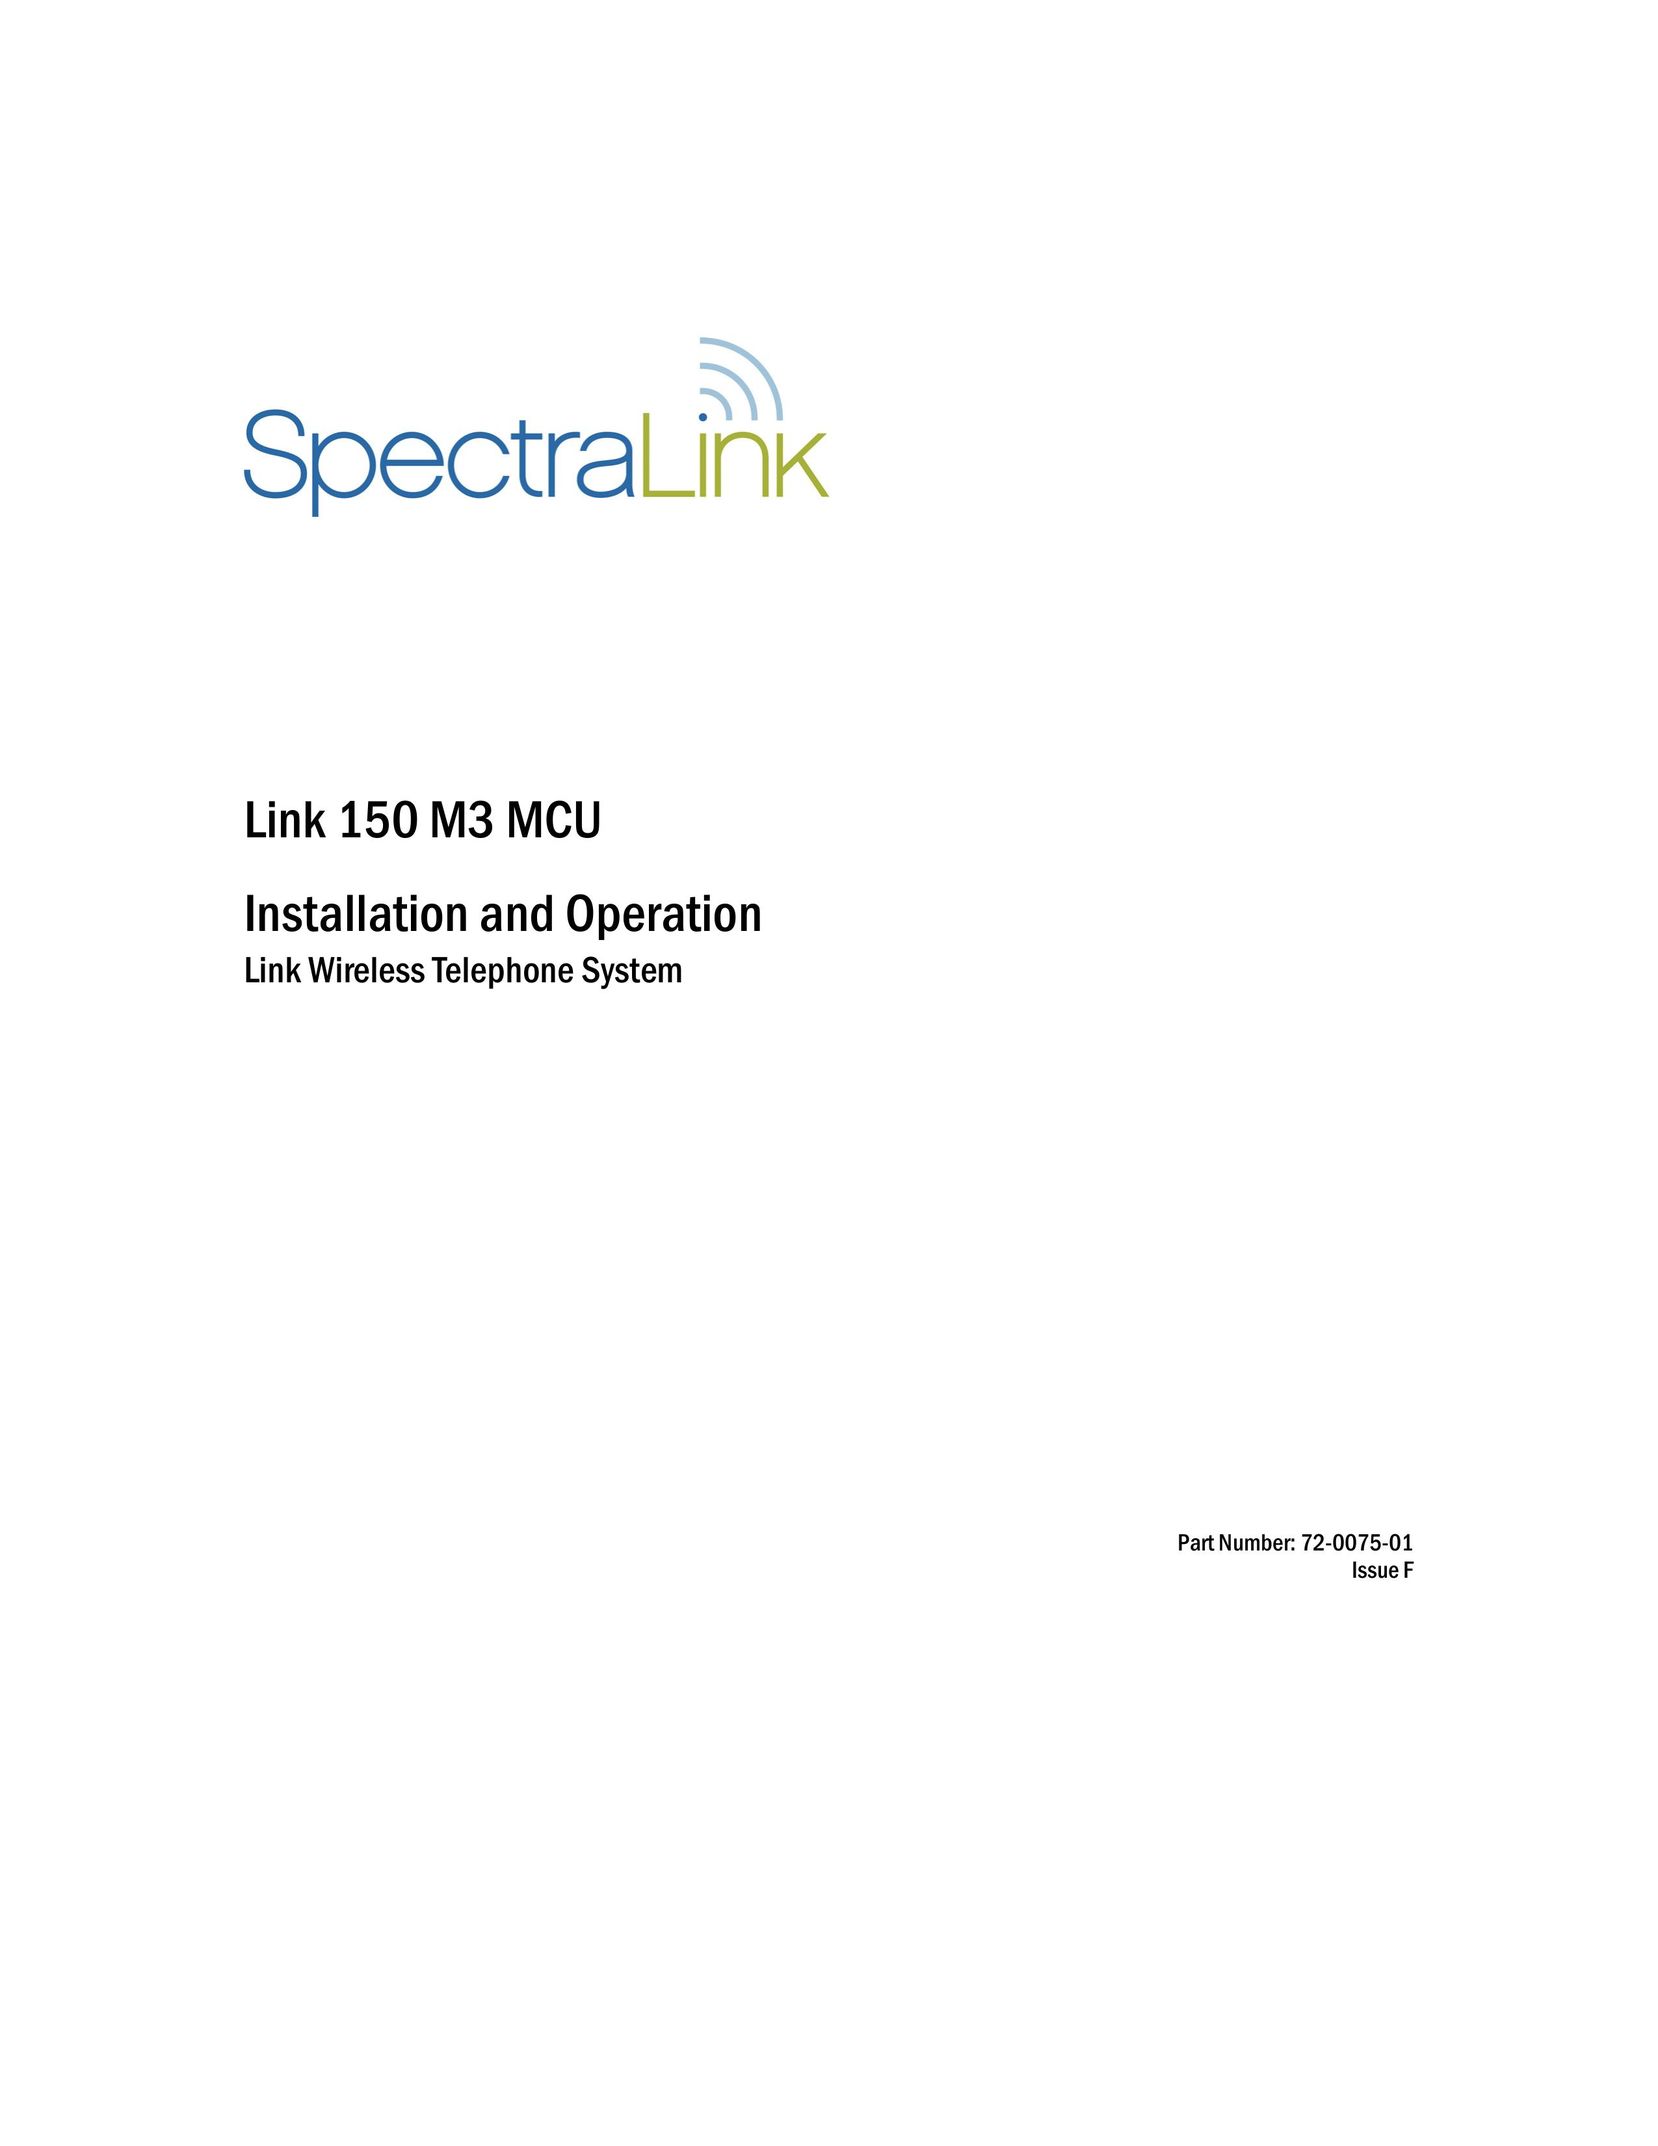 SpectraLink Link 150 M3 MCU Cordless Telephone User Manual